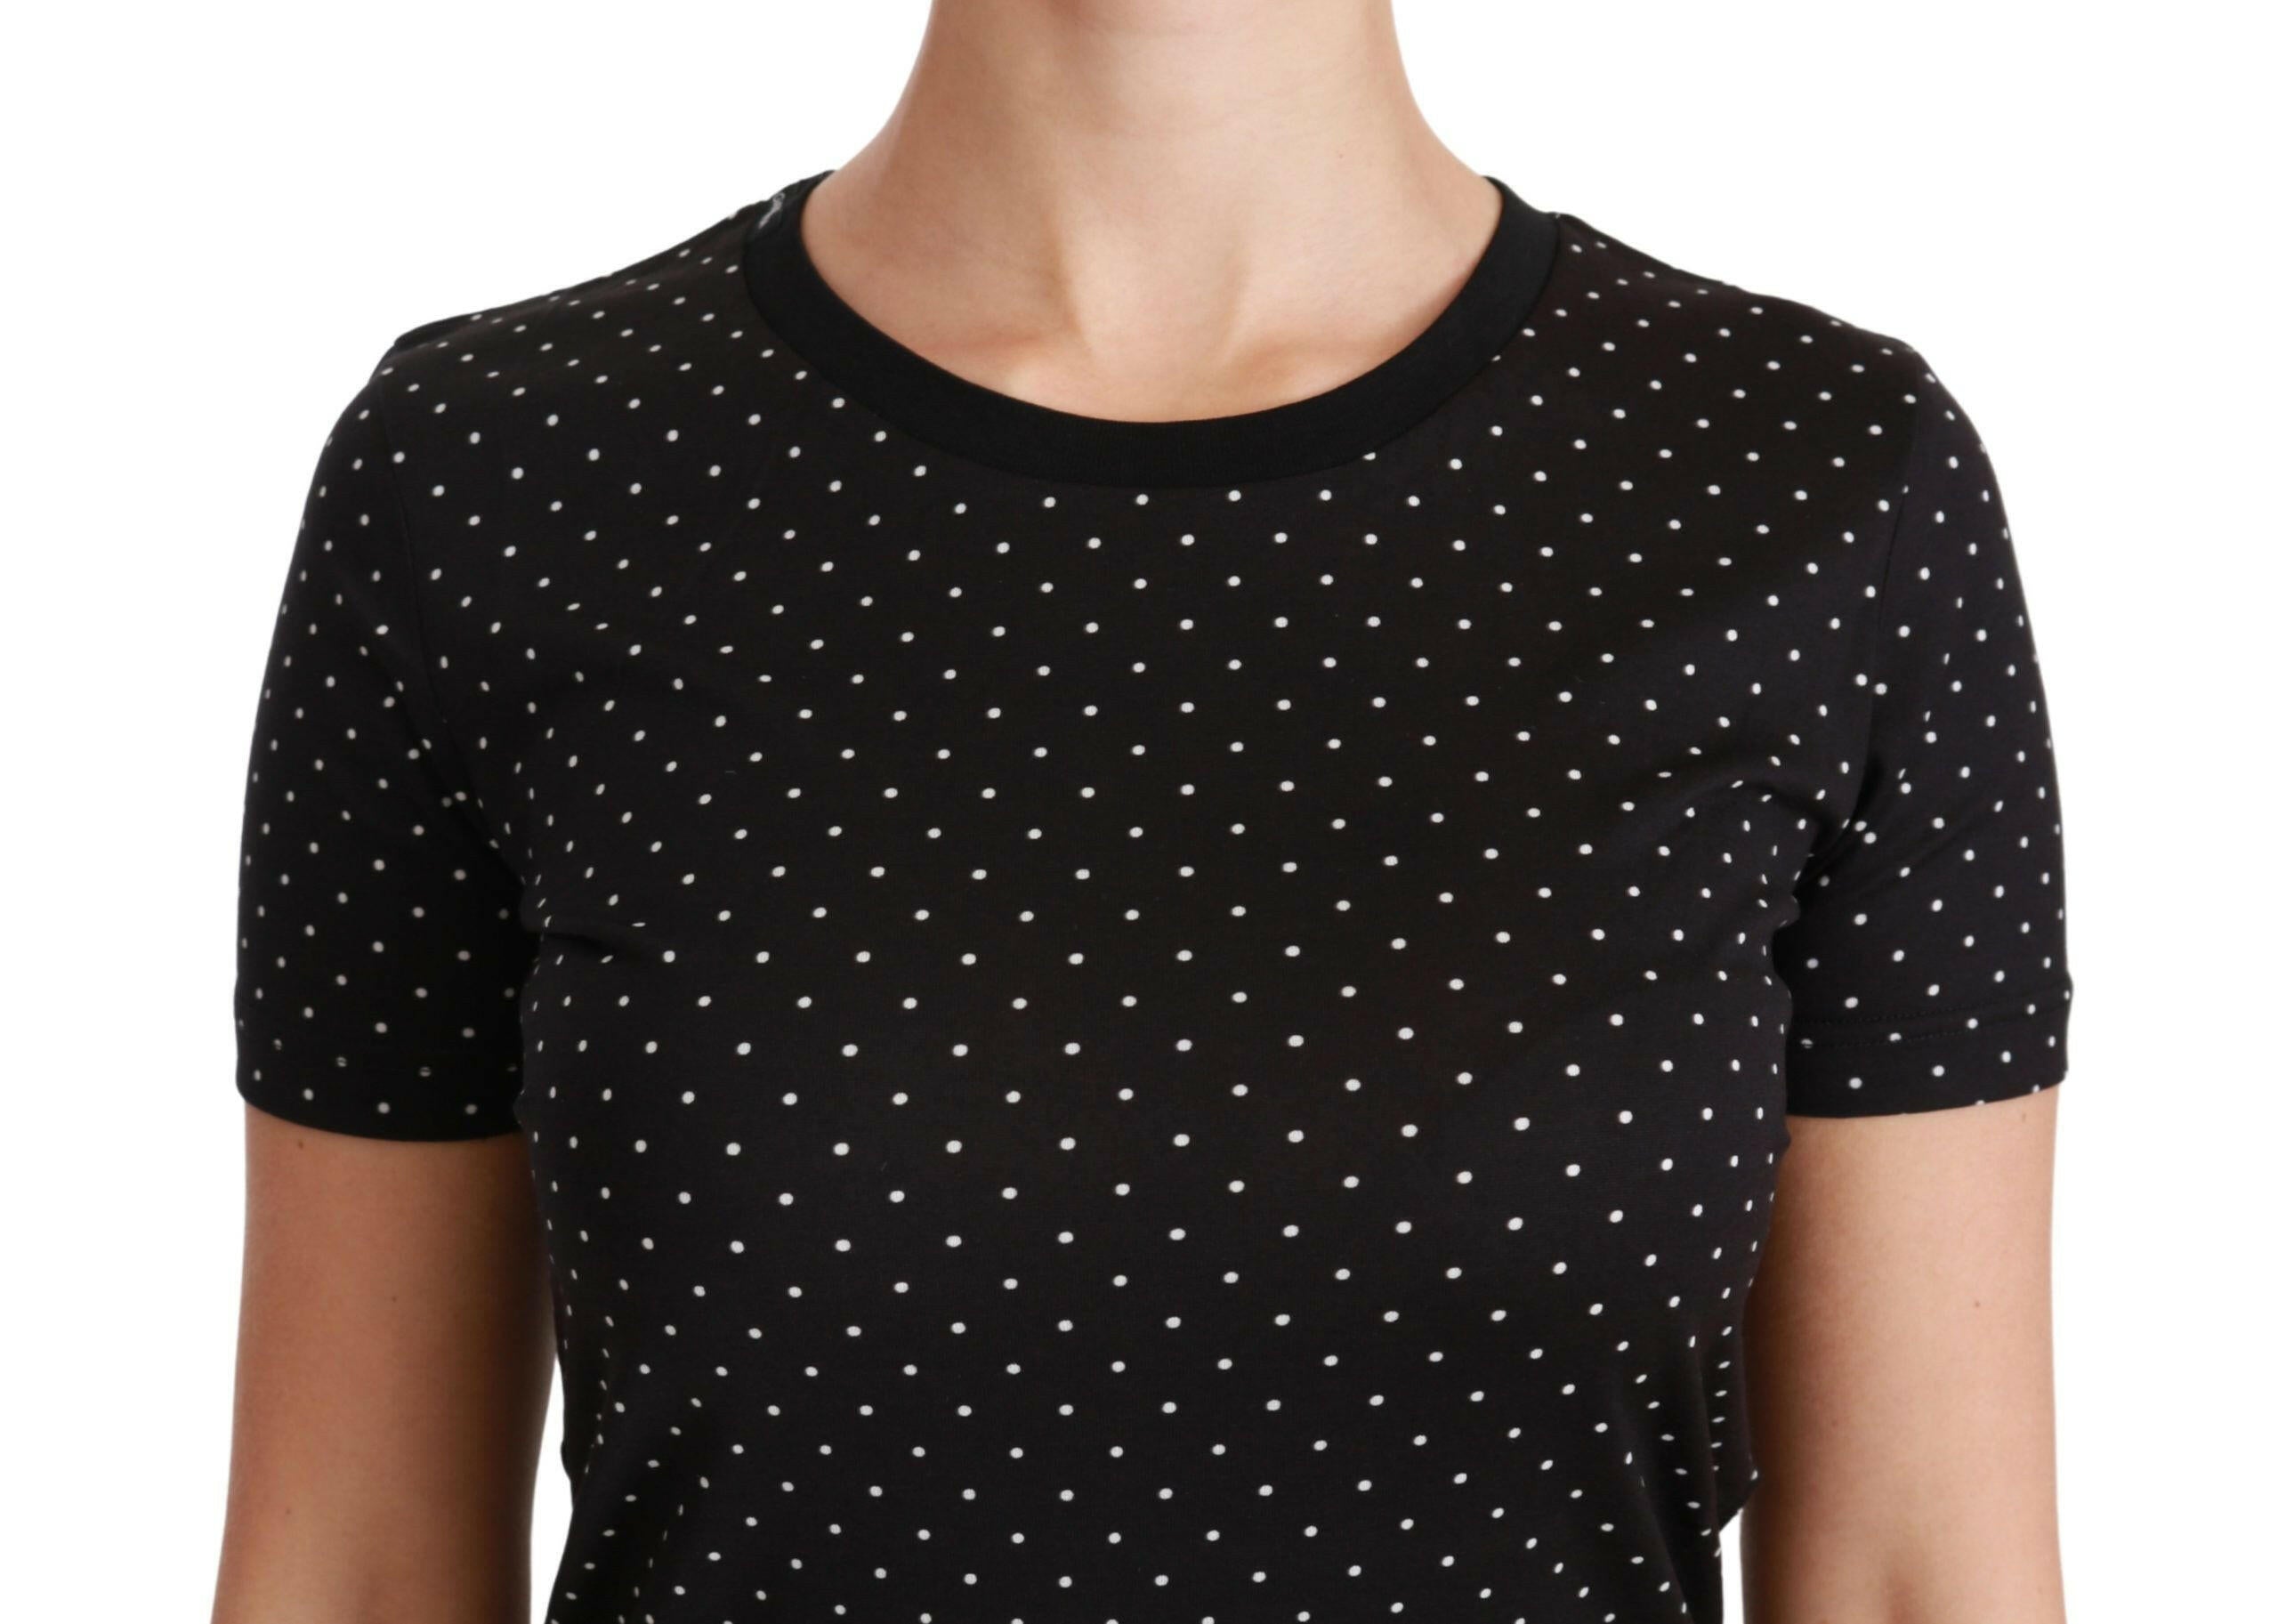 Dolce & Gabbana Black Dotted Crewneck Cotton Top T-shirt - GENUINE AUTHENTIC BRAND LLC  